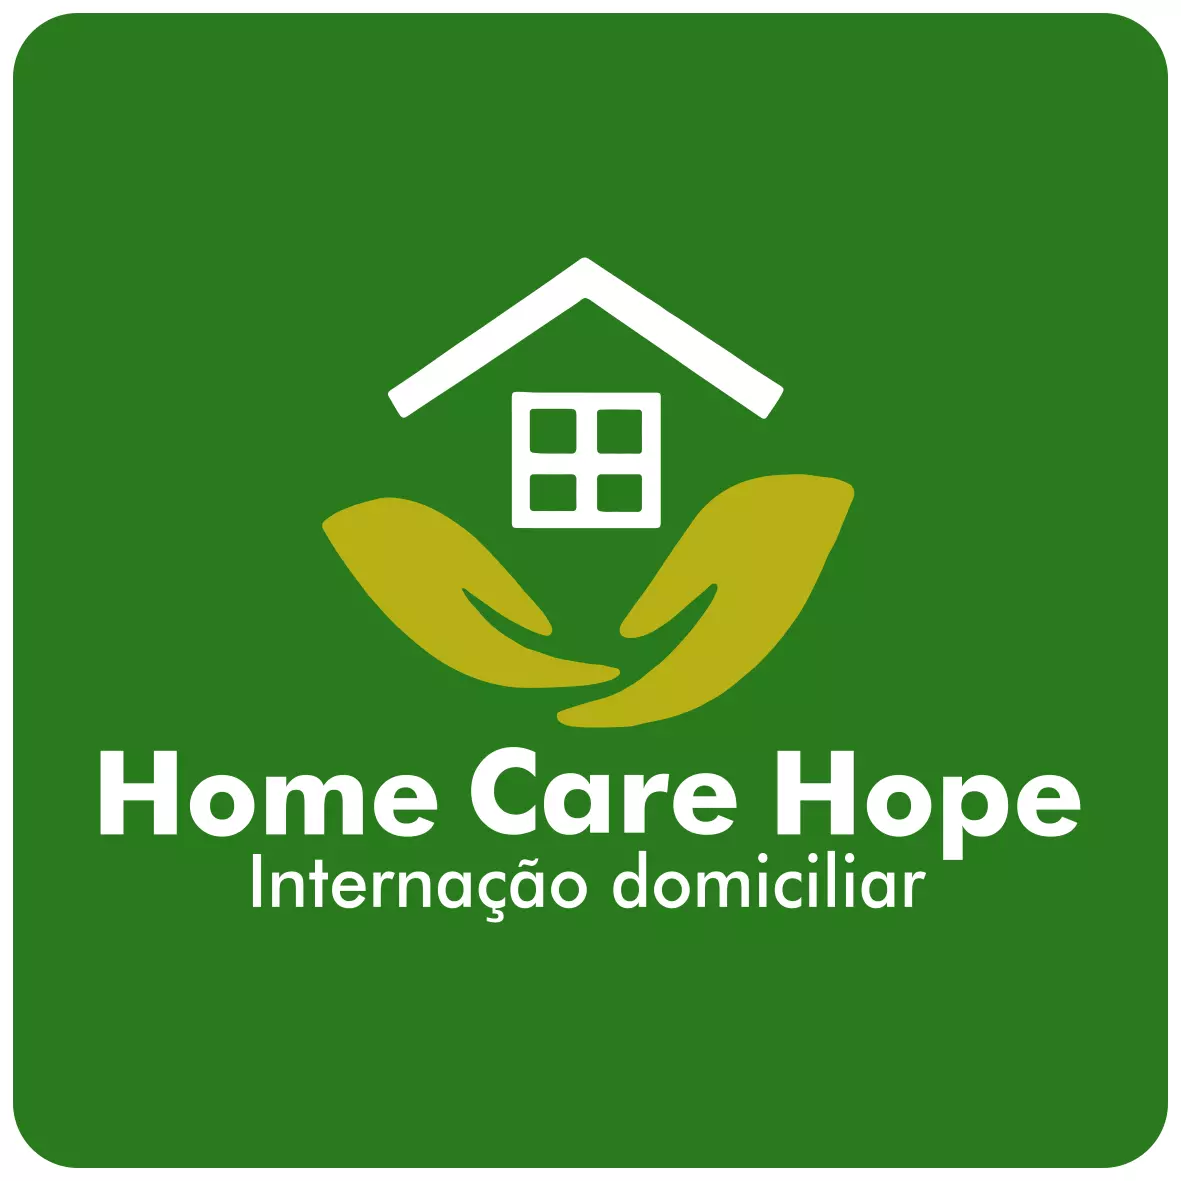 Home Care Hope